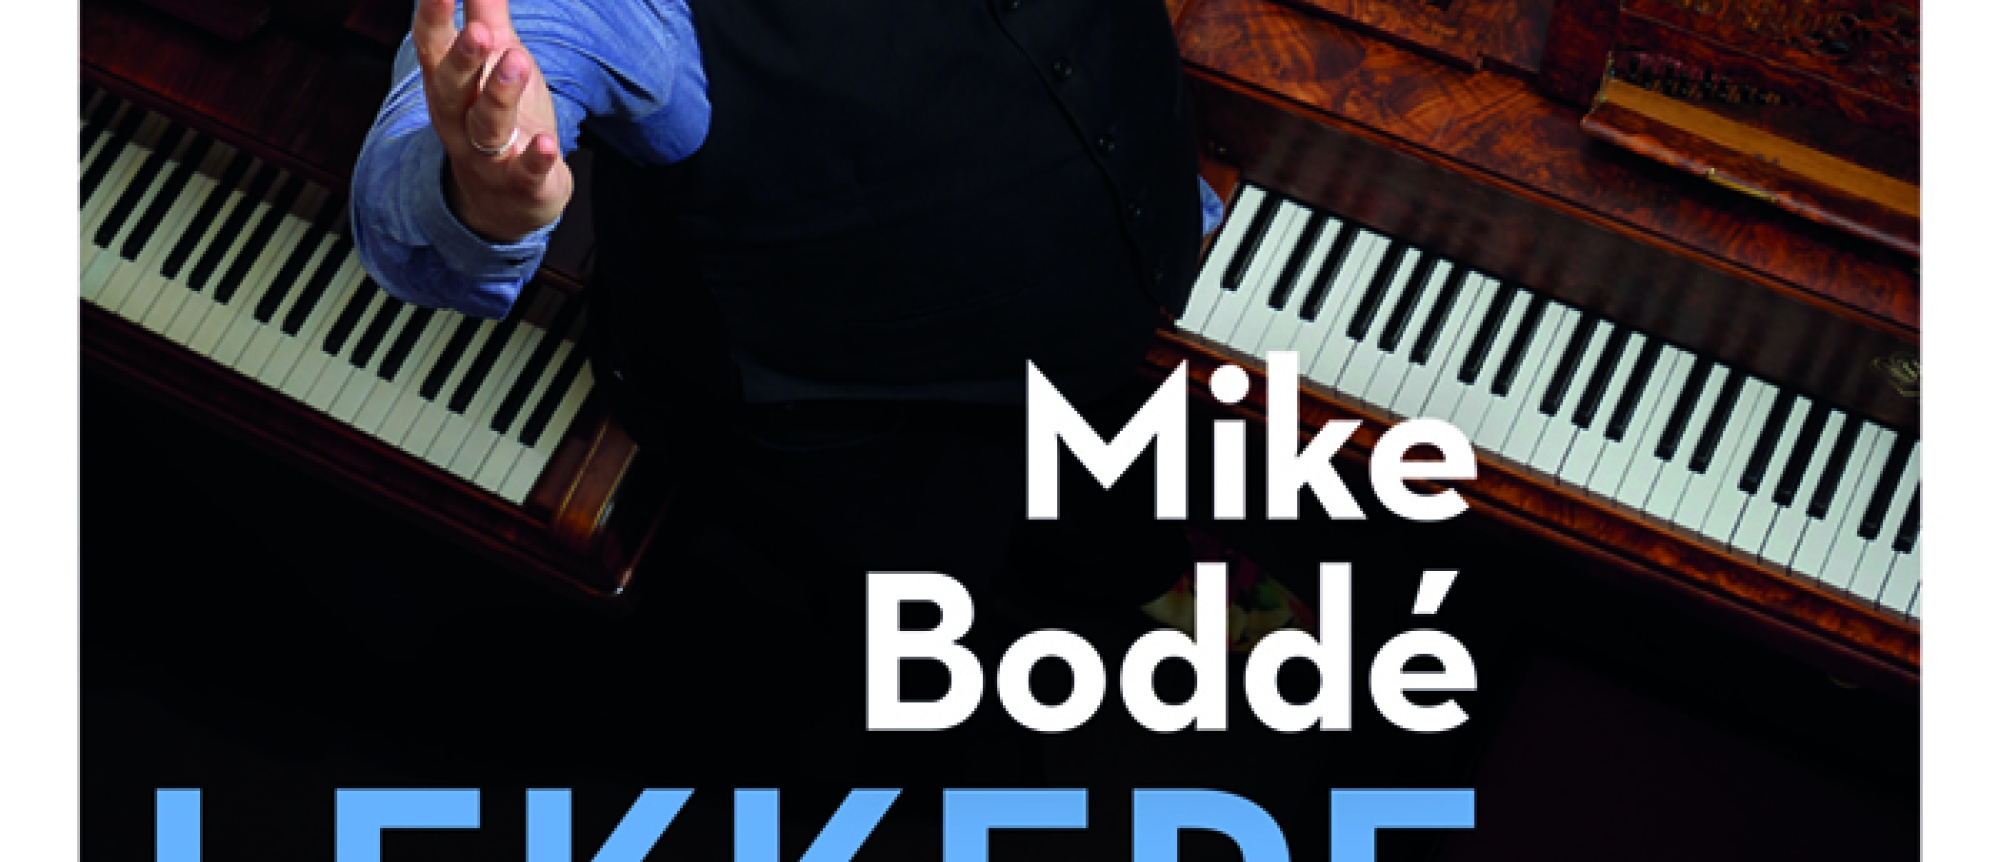 Optreden Mike Boddé